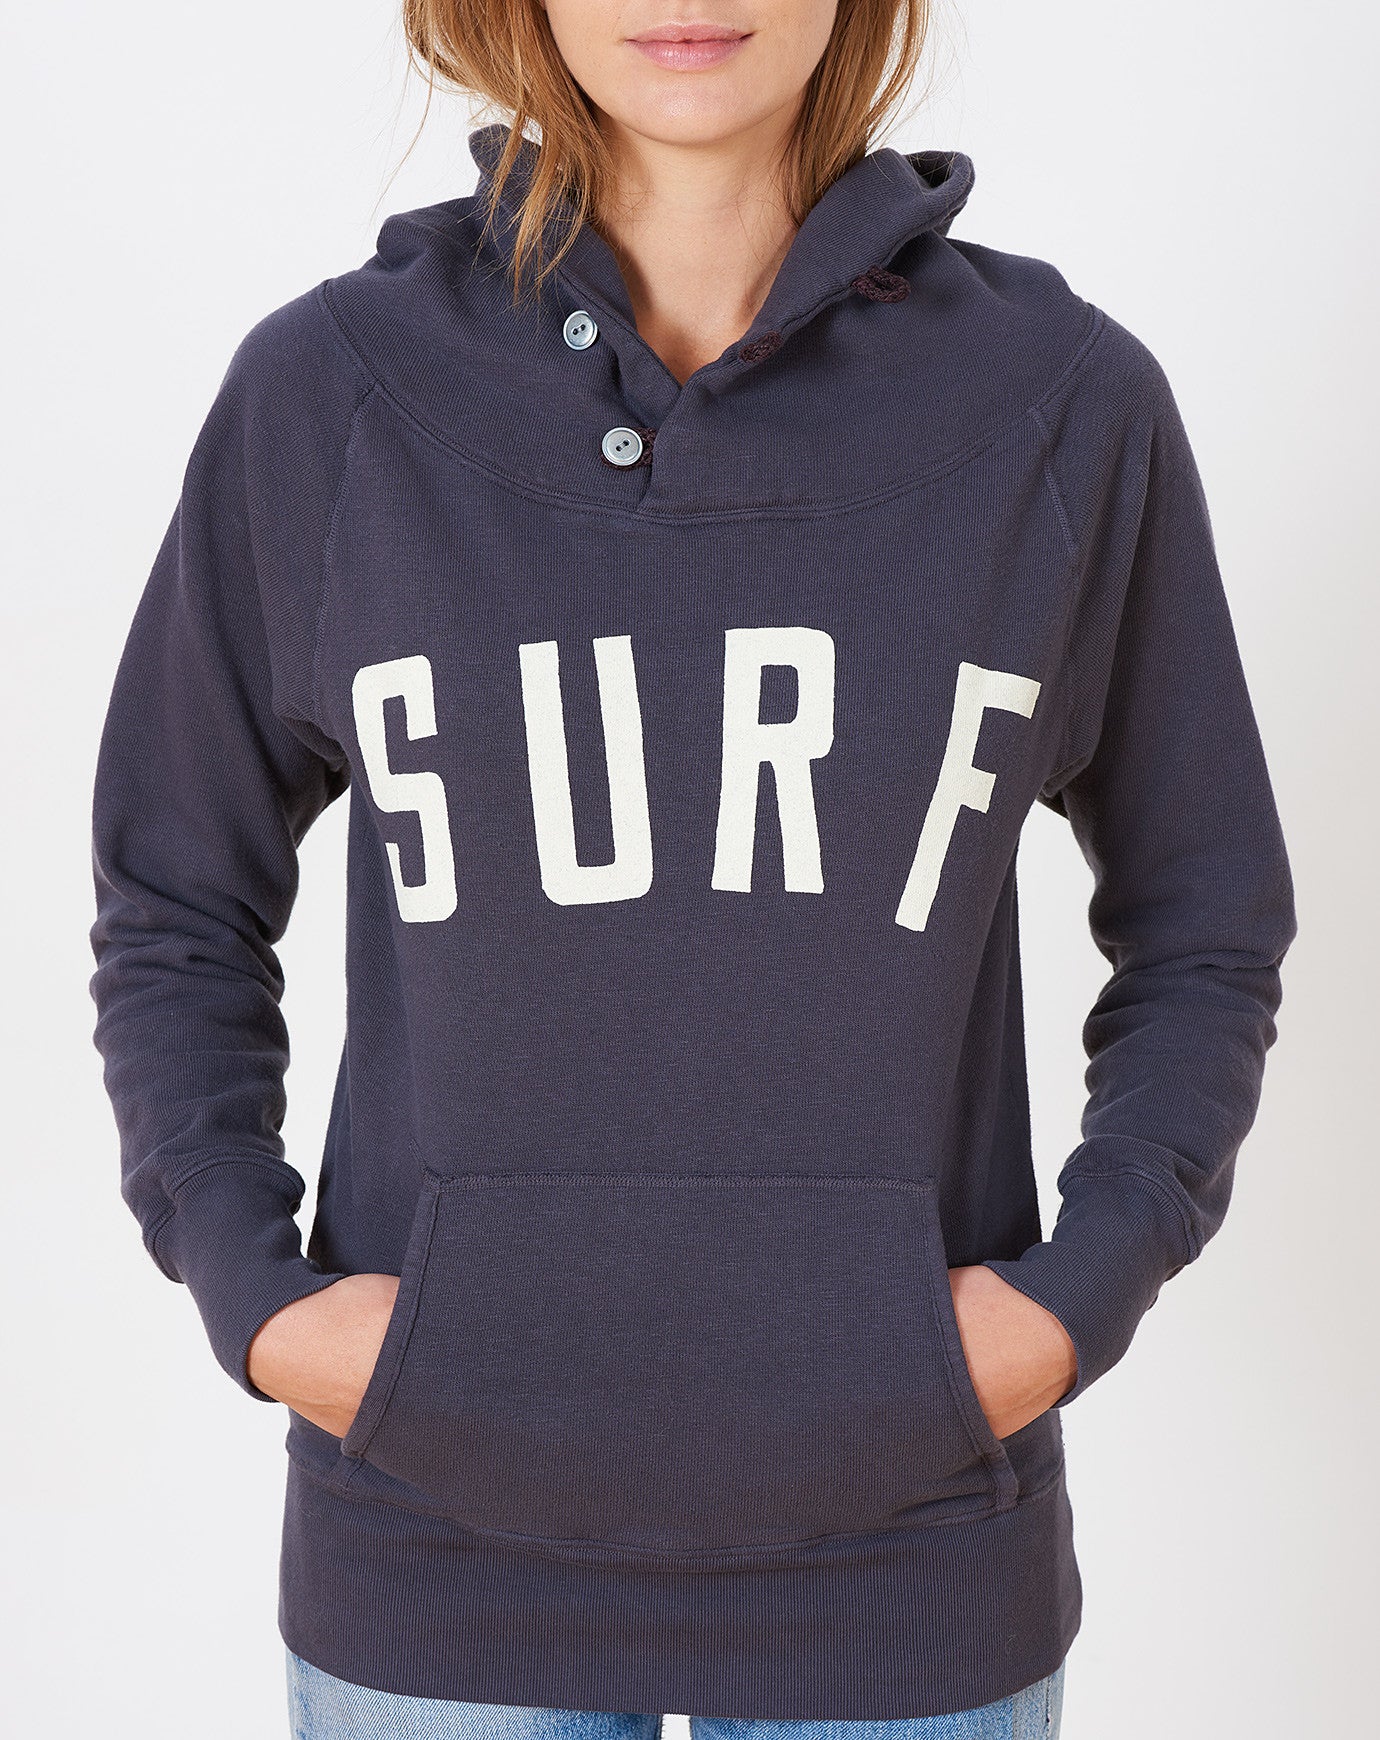 surf sweatshirt